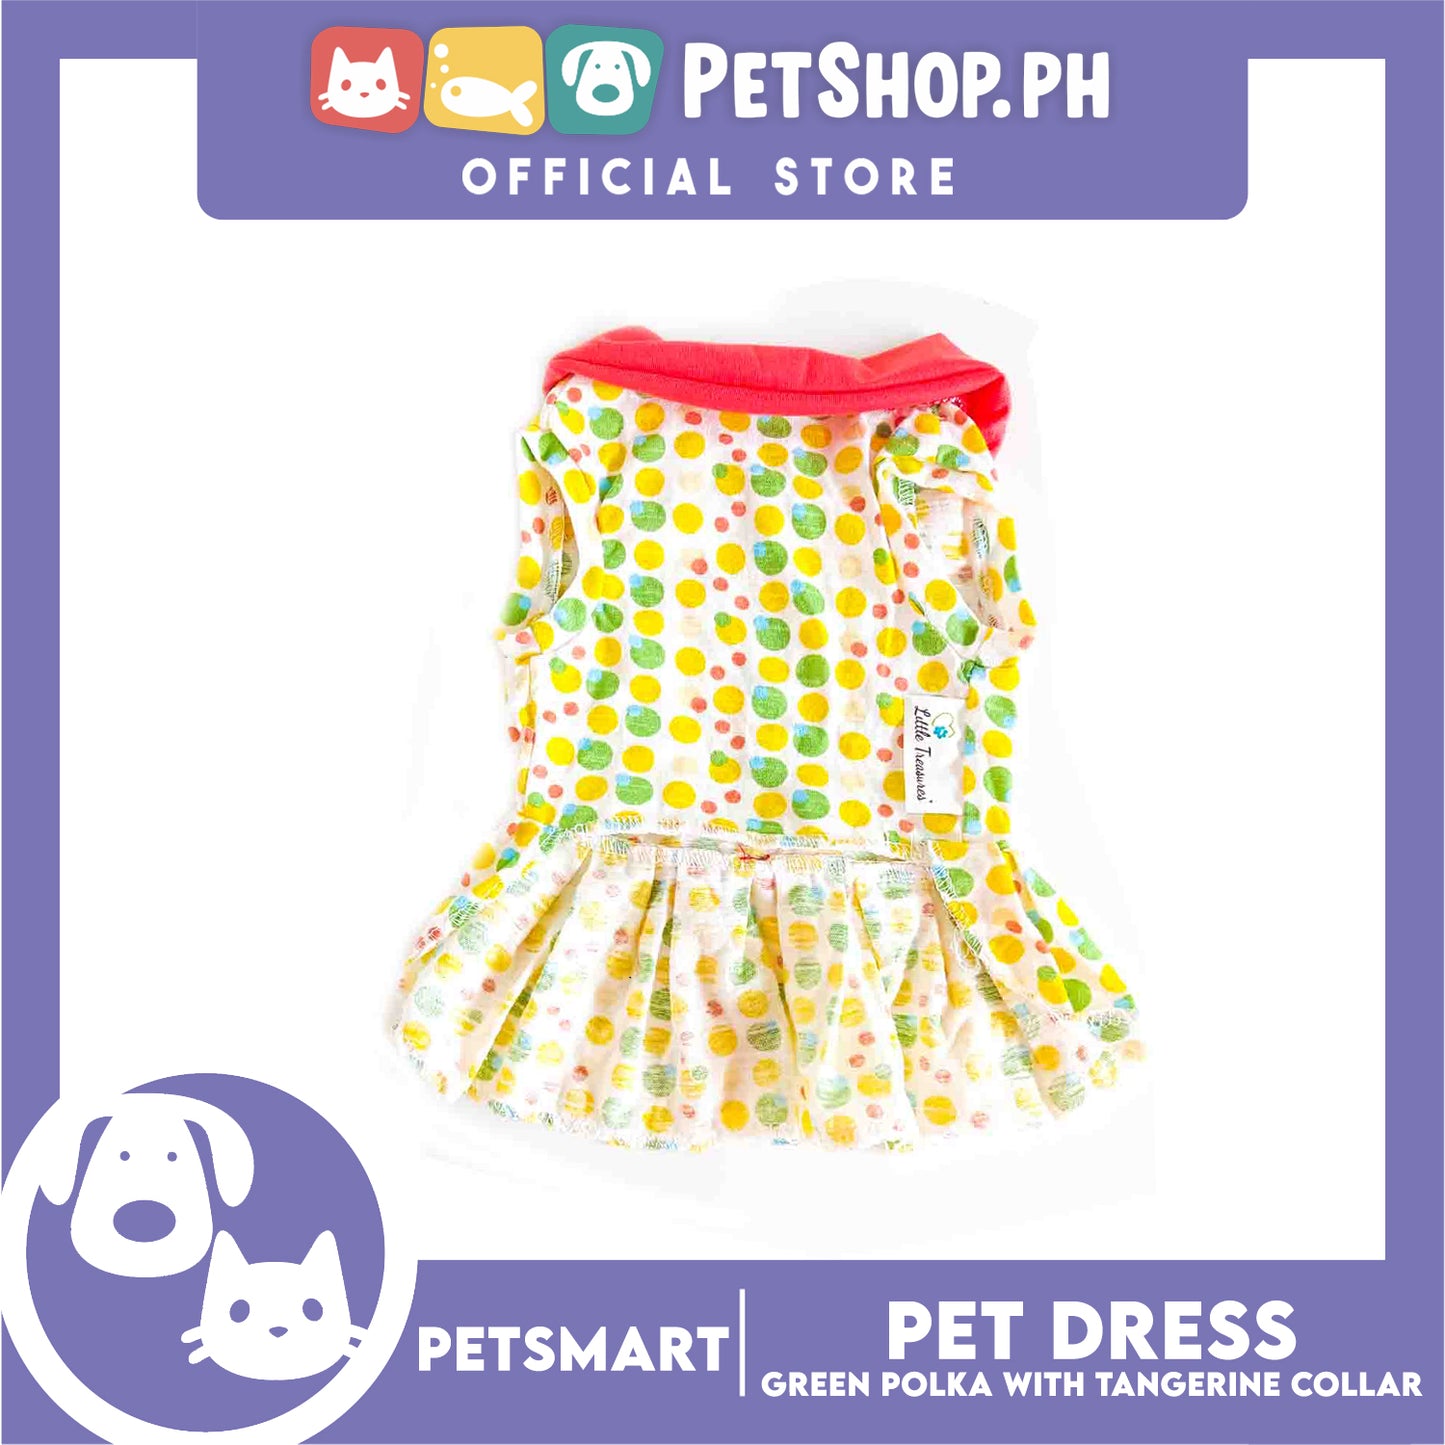 Pet Dress Clothes, Green Polka With Tangerine Collar (Medium)